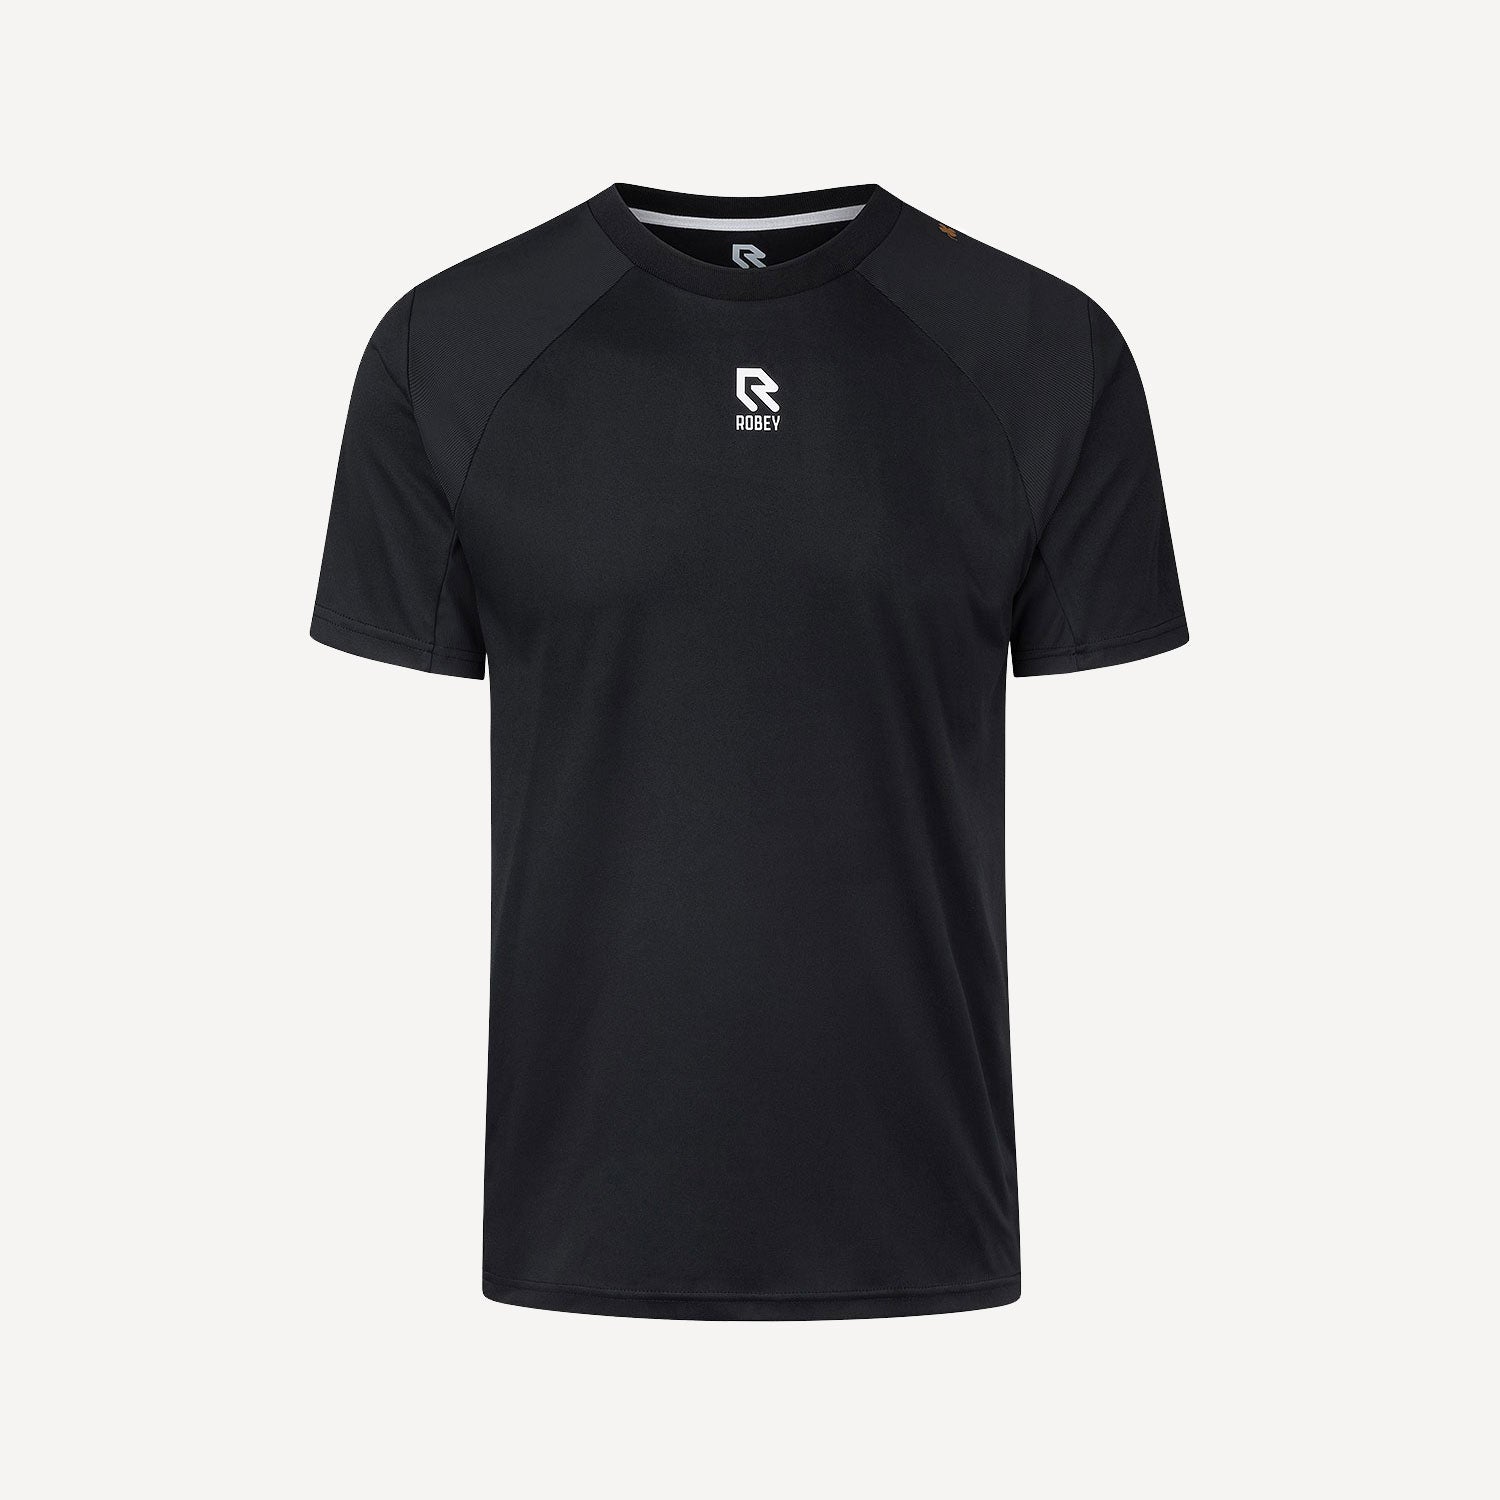 Robey Ace Men's Tennis Shirt - Black (1)